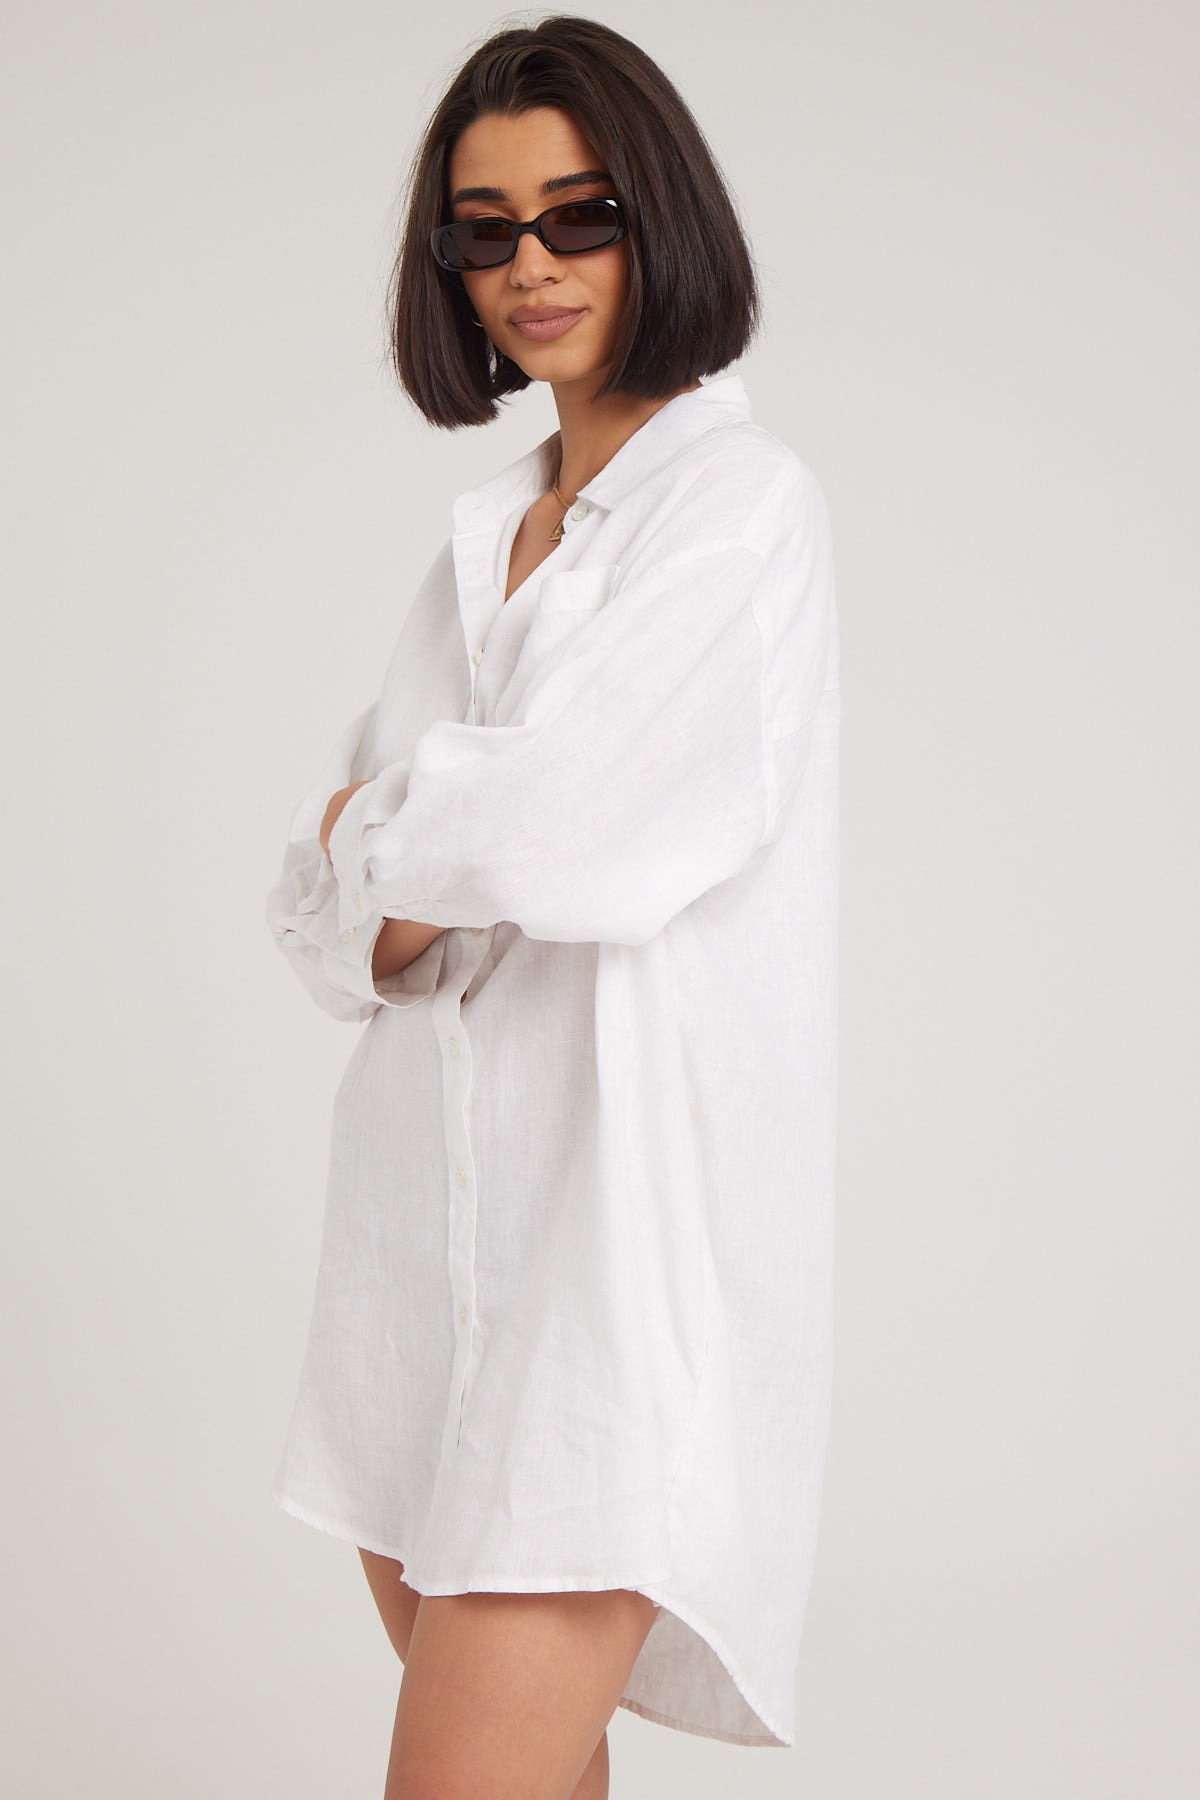 Academy Brand Hampton Linen Dress White – Universal Store